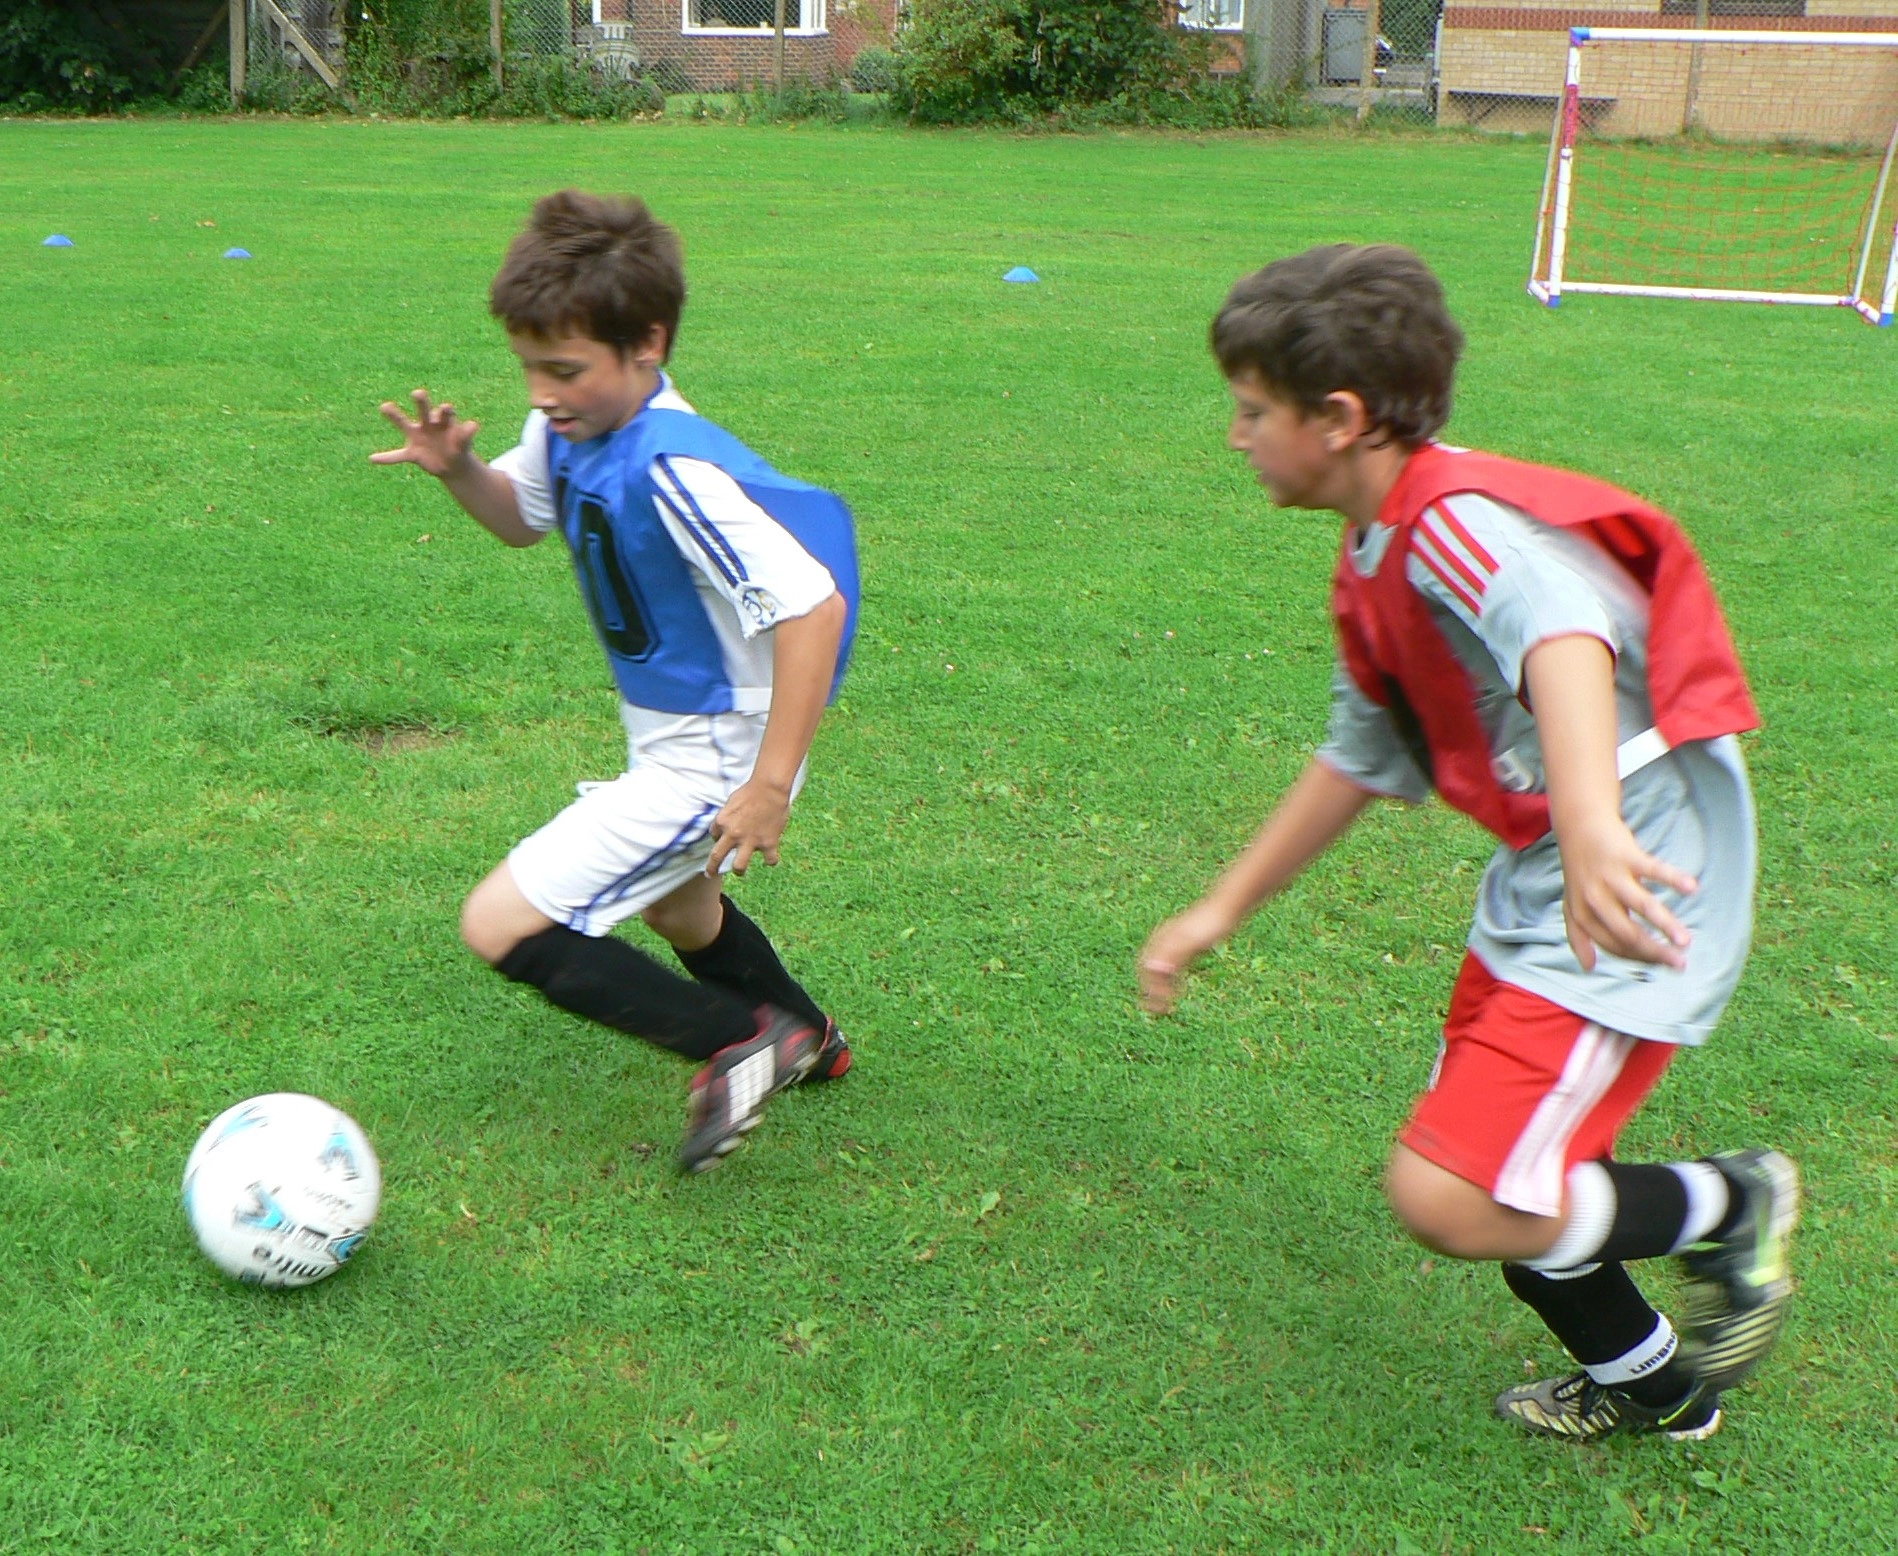 KOOSA Kids Summer Football Academy, Develop Core Football Skils & Have Fun